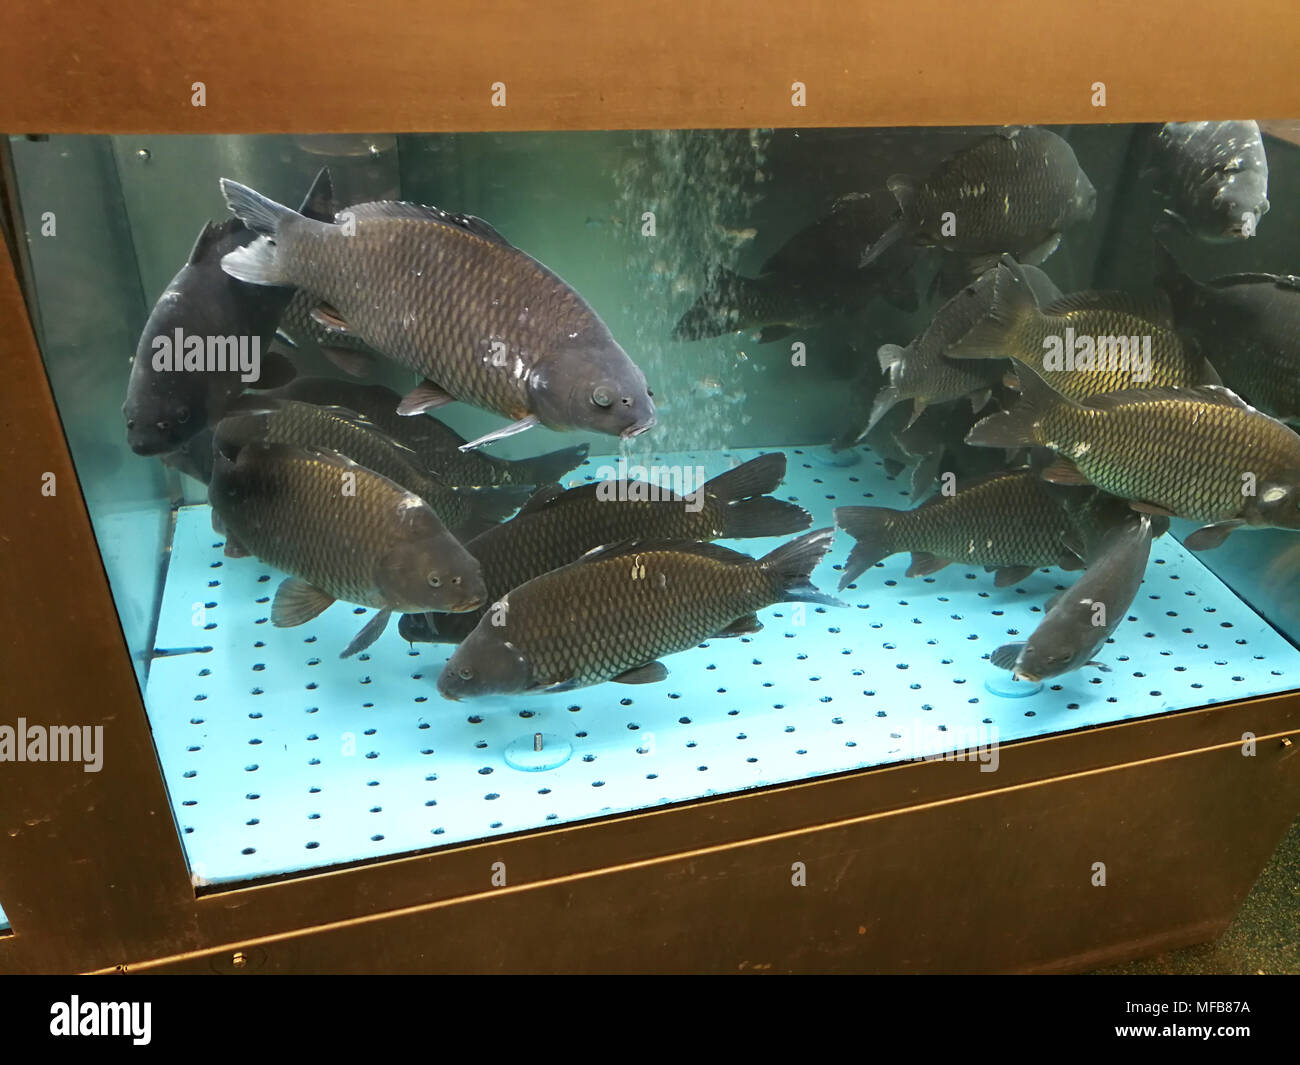 Fish net aquarium hi-res stock photography and images - Alamy